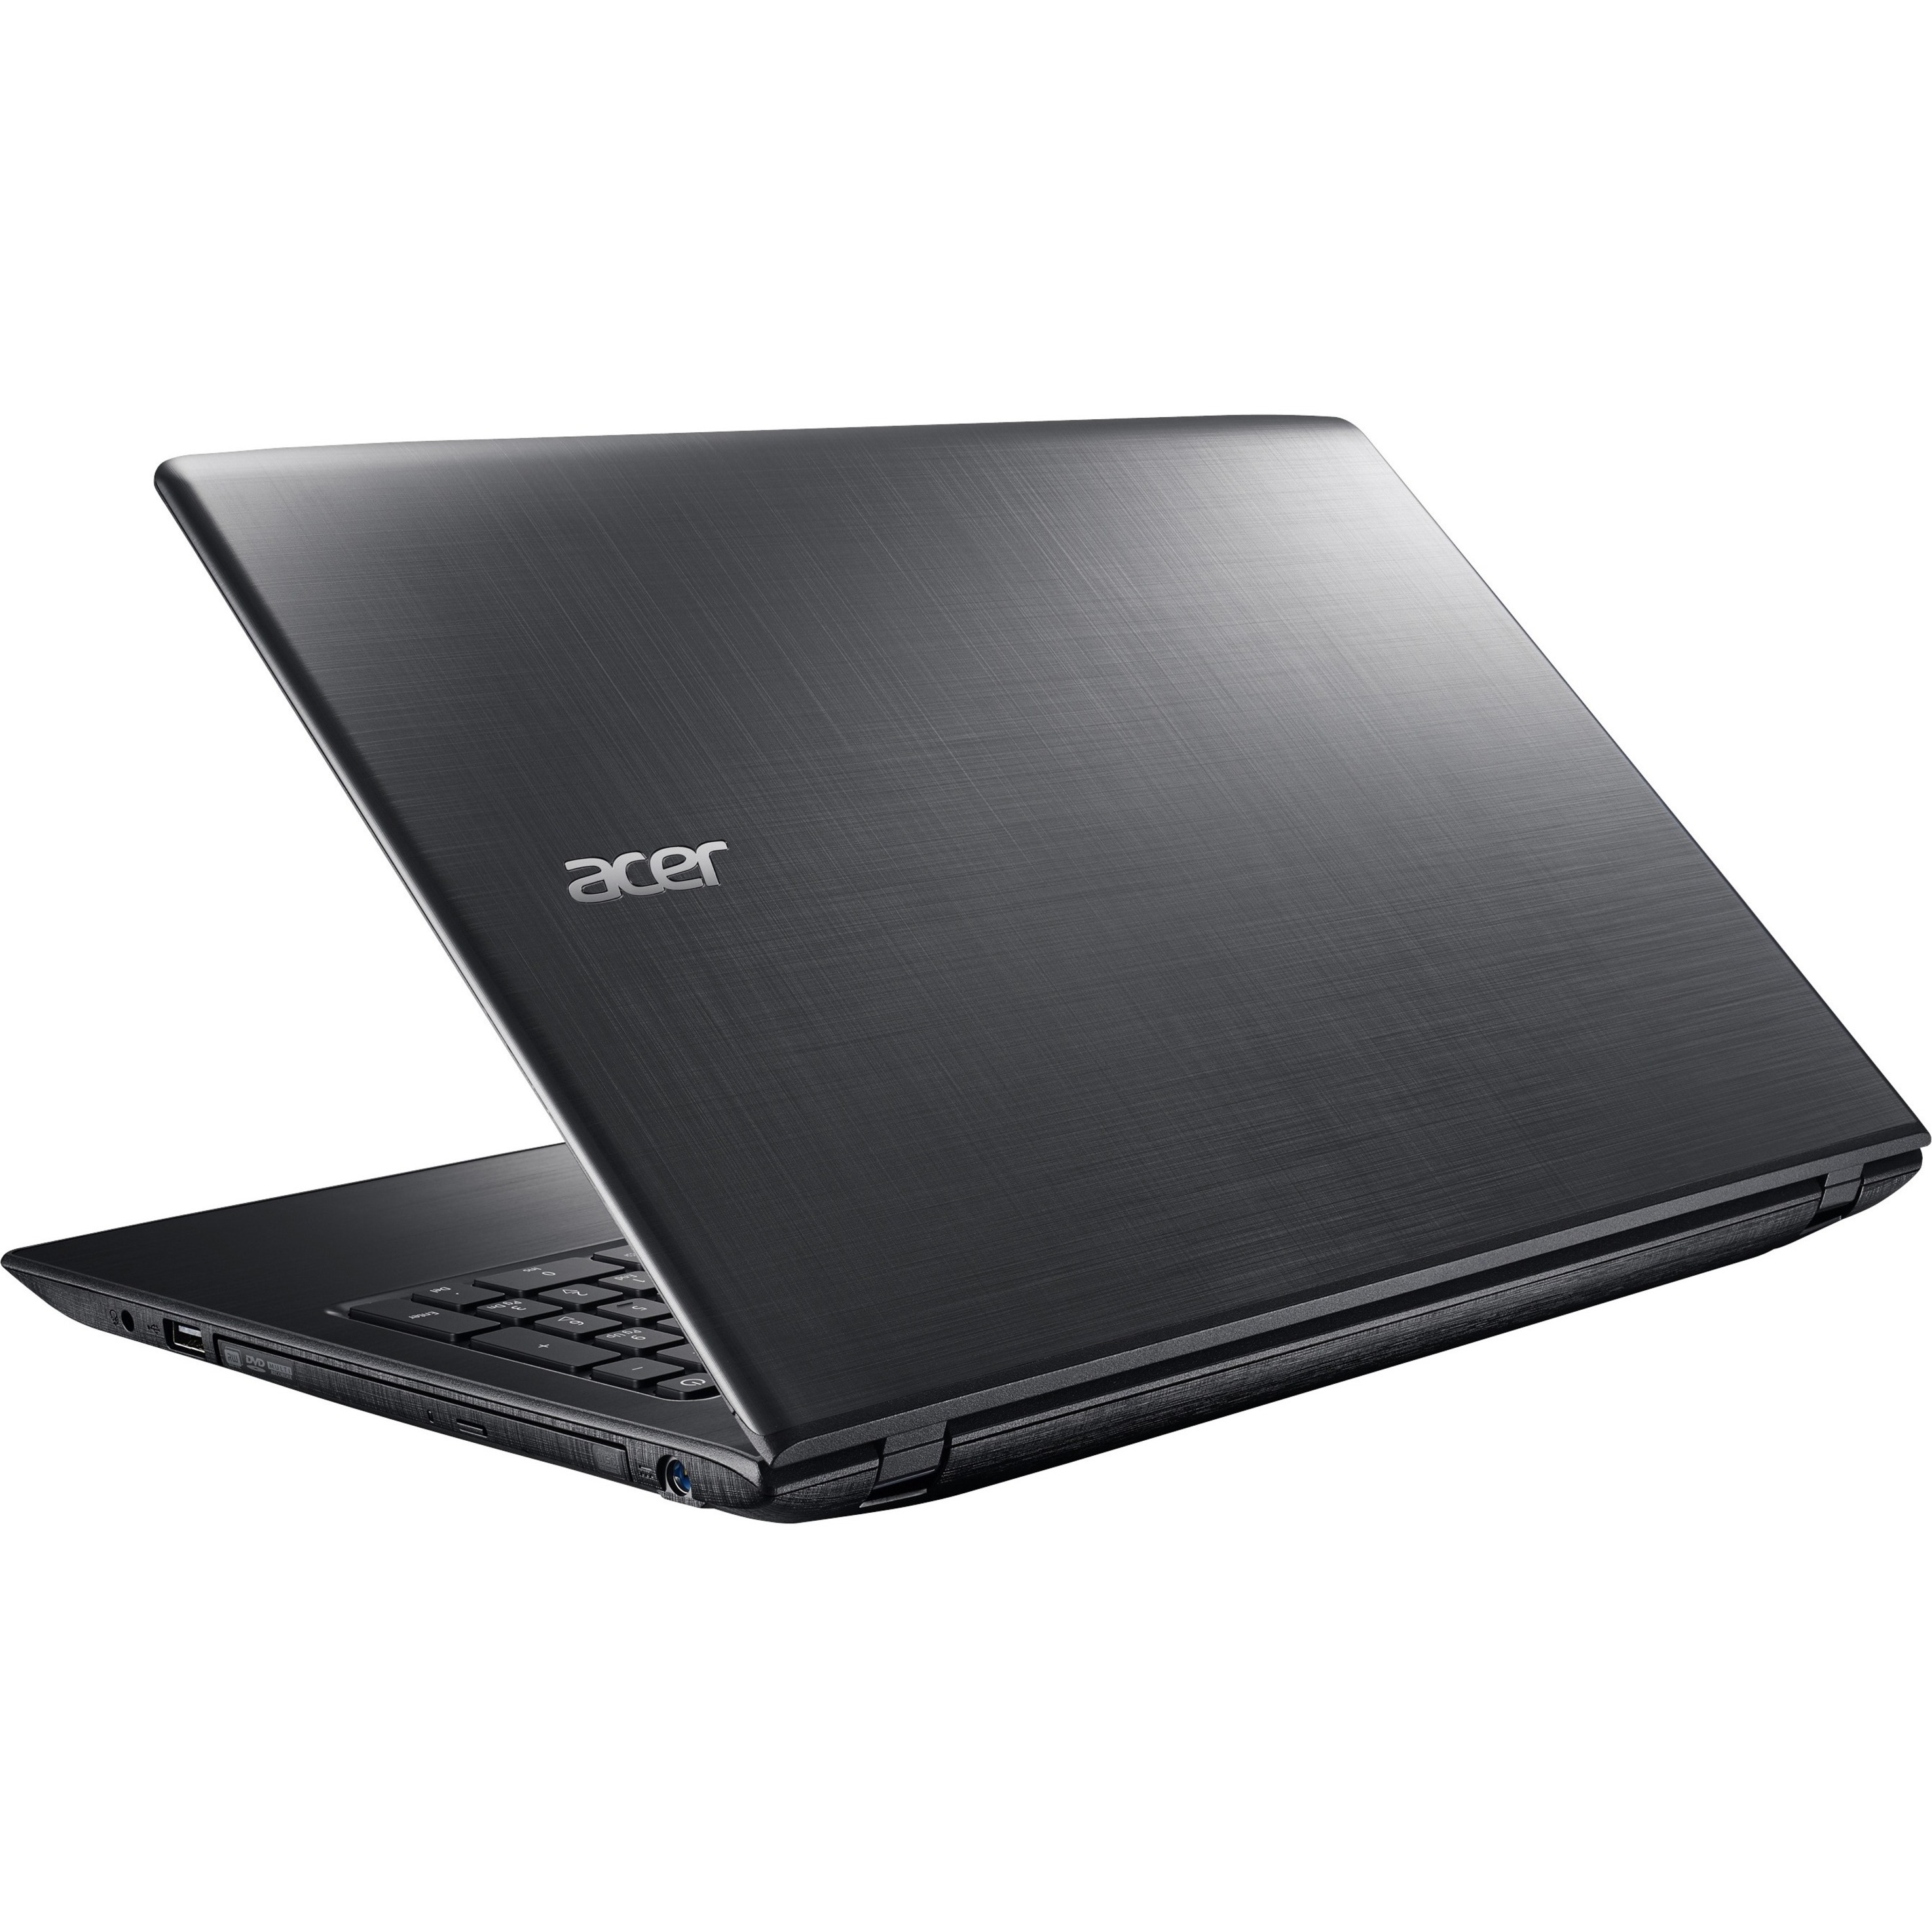 Acer Aspire 15.6" Full HD Laptop, Intel Core i5 i5-7200U, 256GB SSD, DVD Writer, Windows 10 Home, E5-575G-57D4 - image 5 of 6